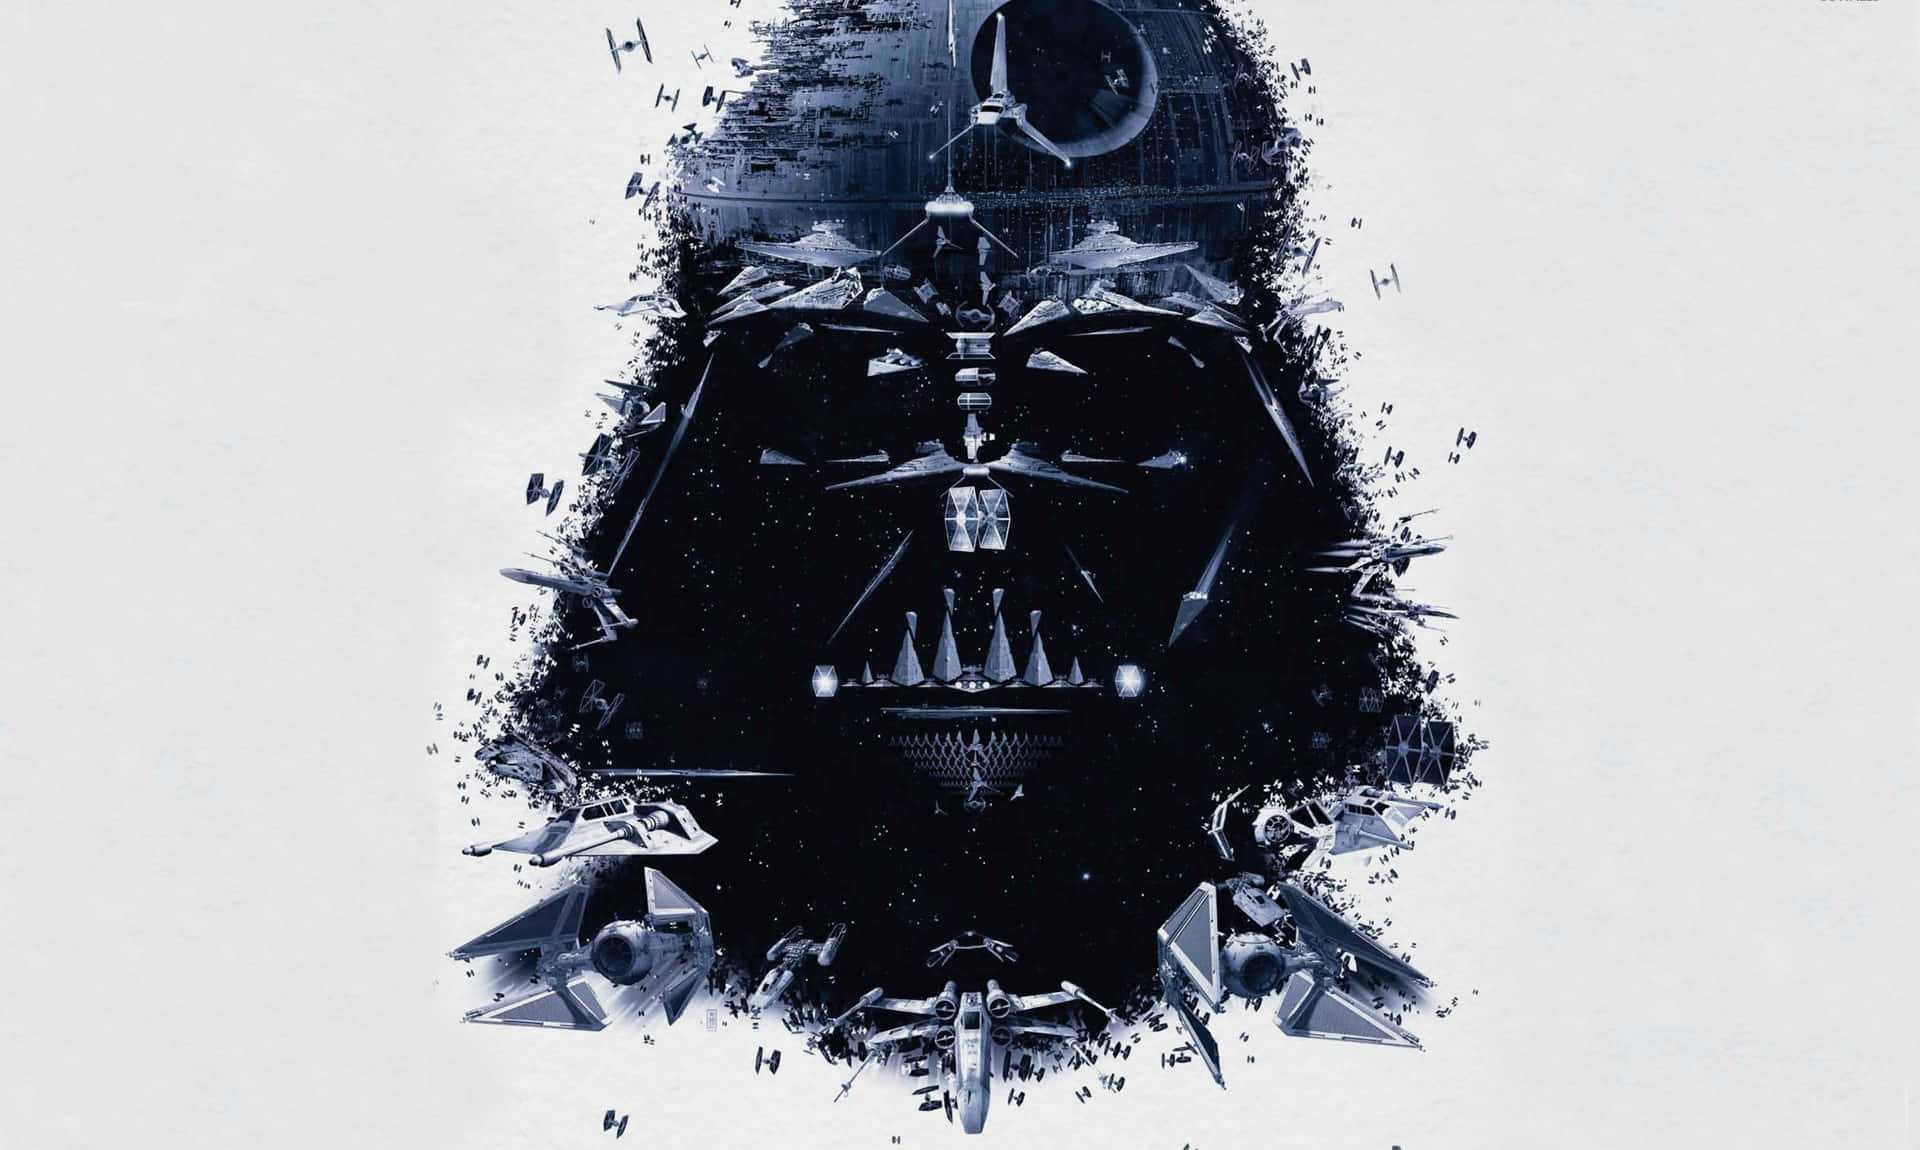 Darth Vader, commander of the Galactic Empire